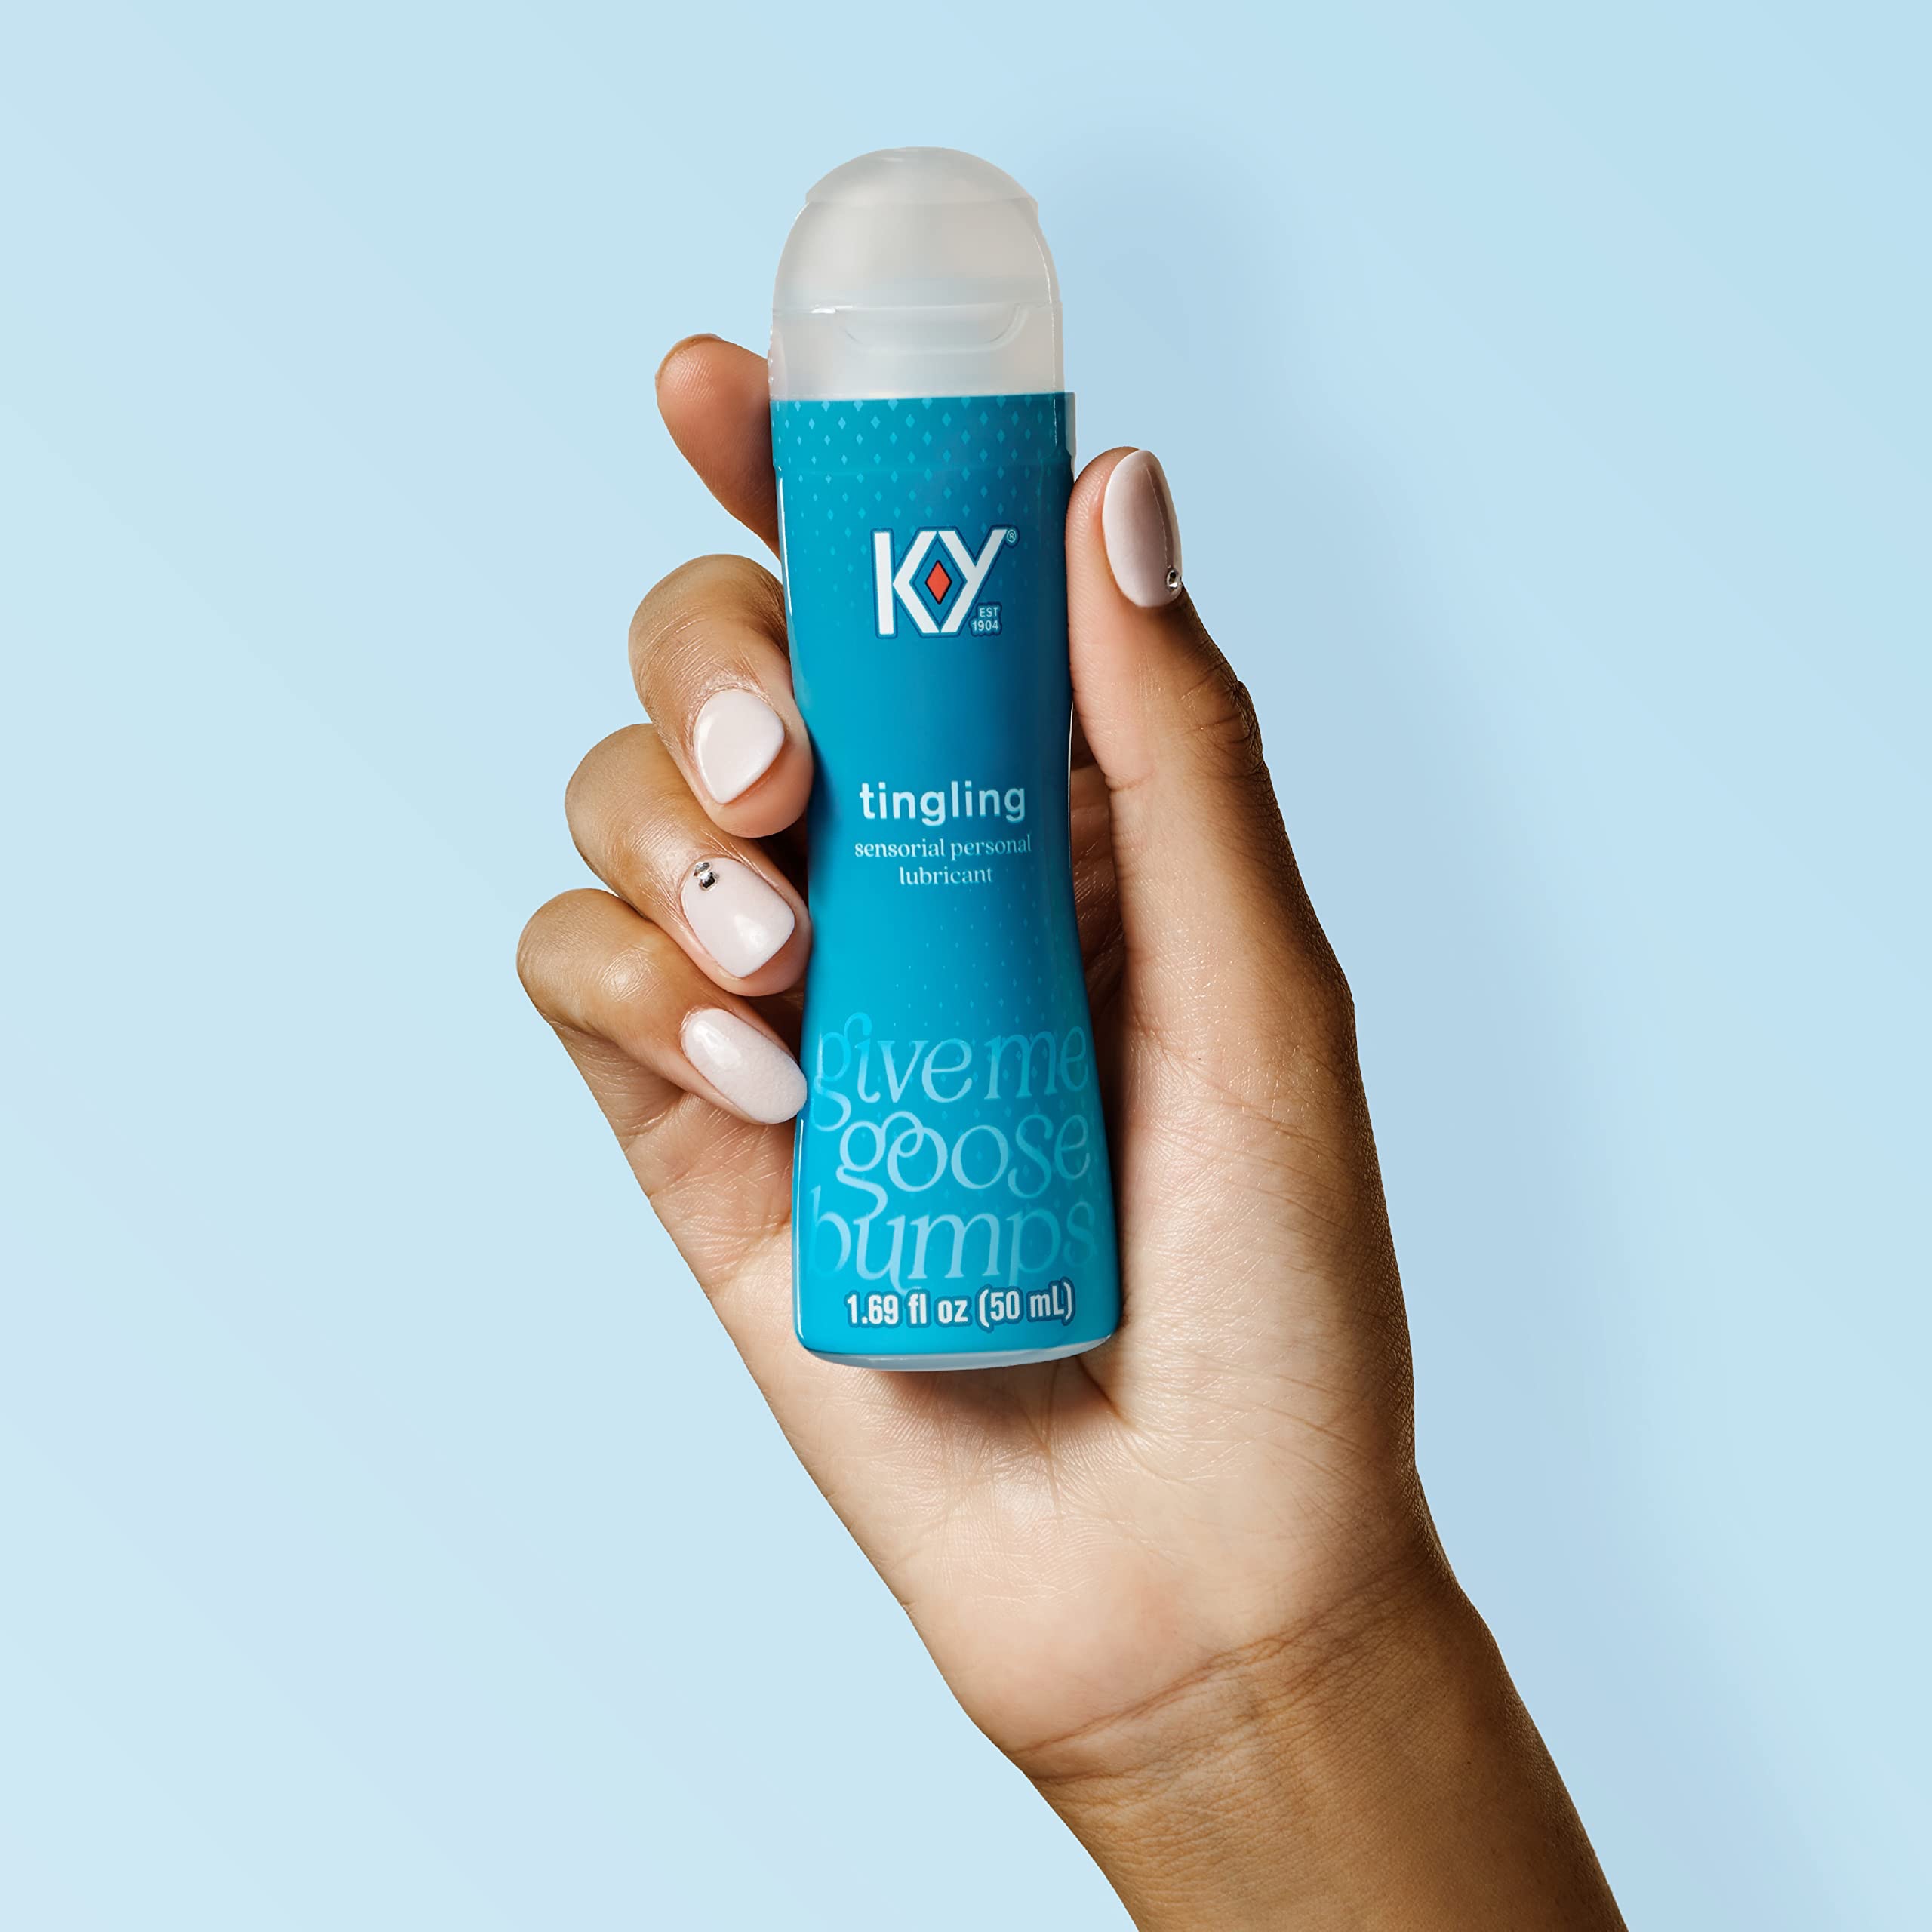 Amazon.com: K-Y Tingling Water Based Lube, Sensorial Personal Lubricant, 1.69 fl oz : Health & Household